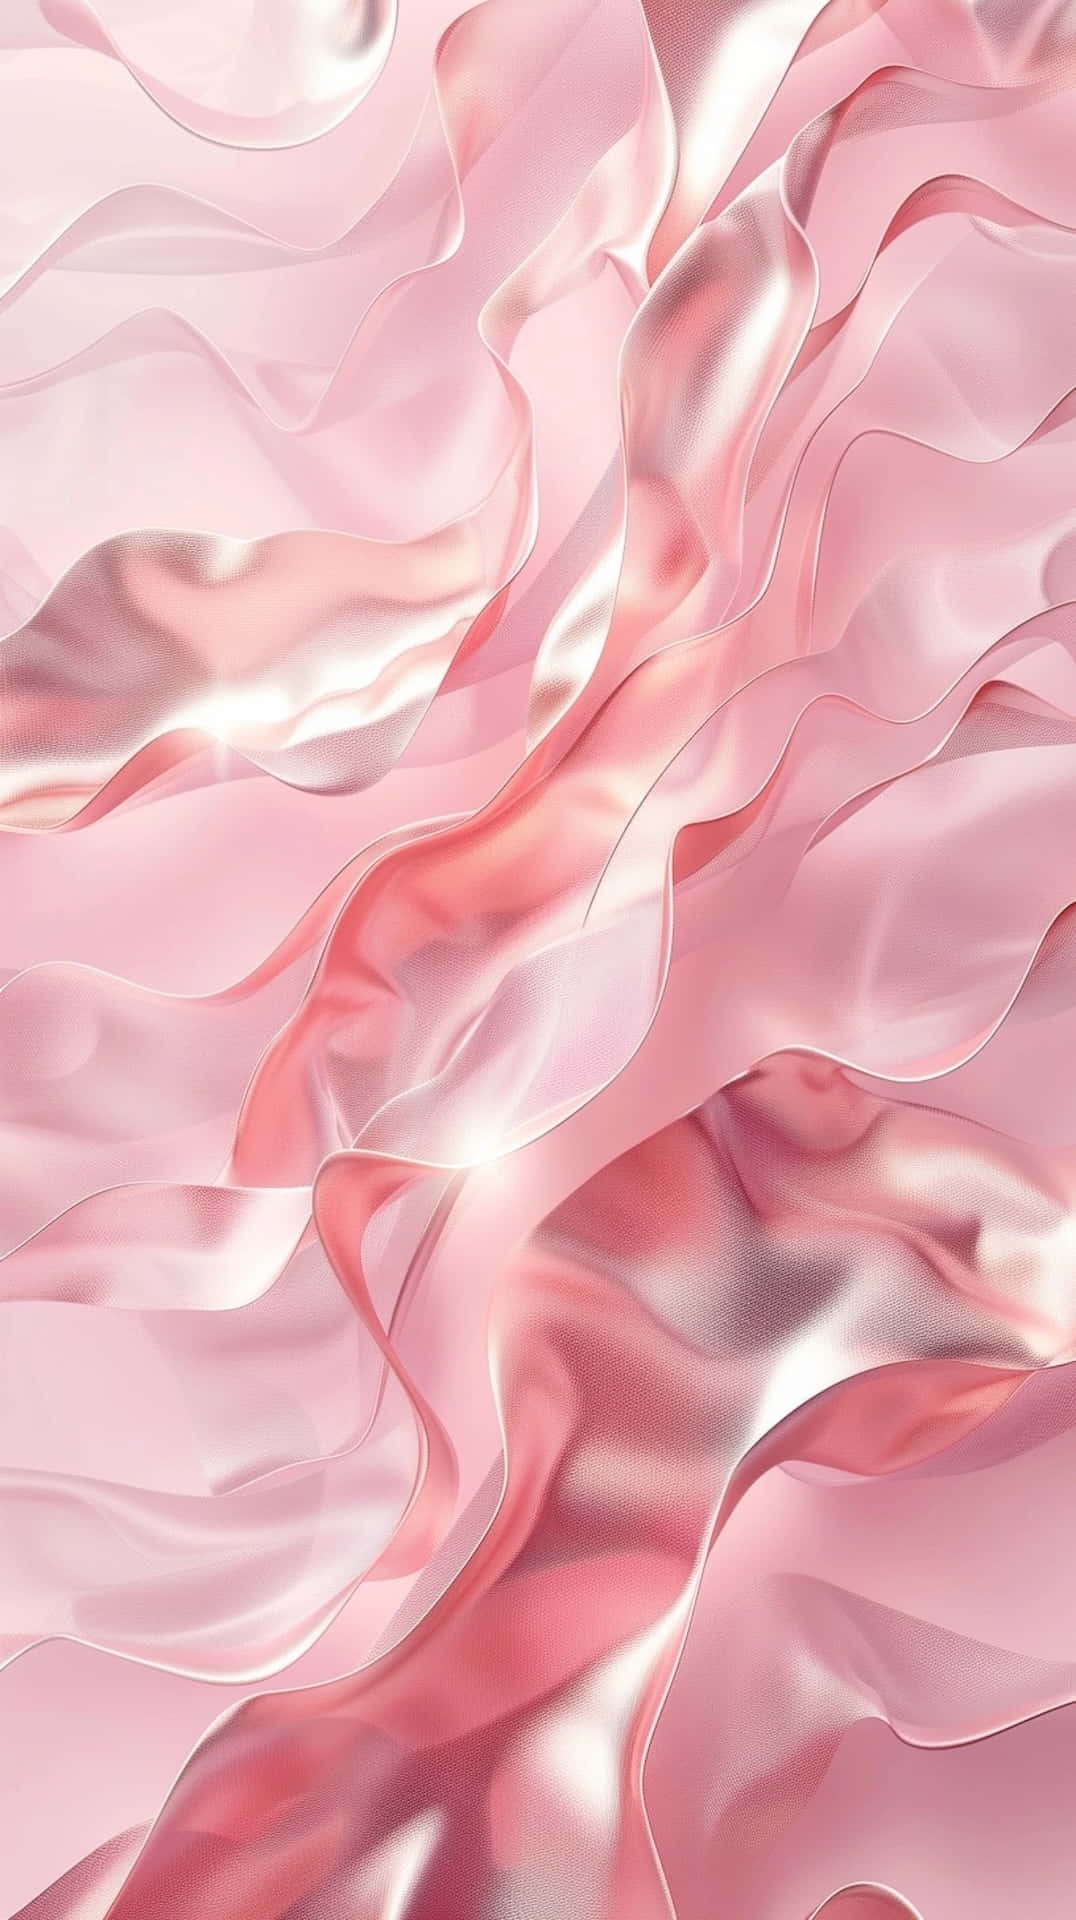 Pink Satin Waves Texture Wallpaper